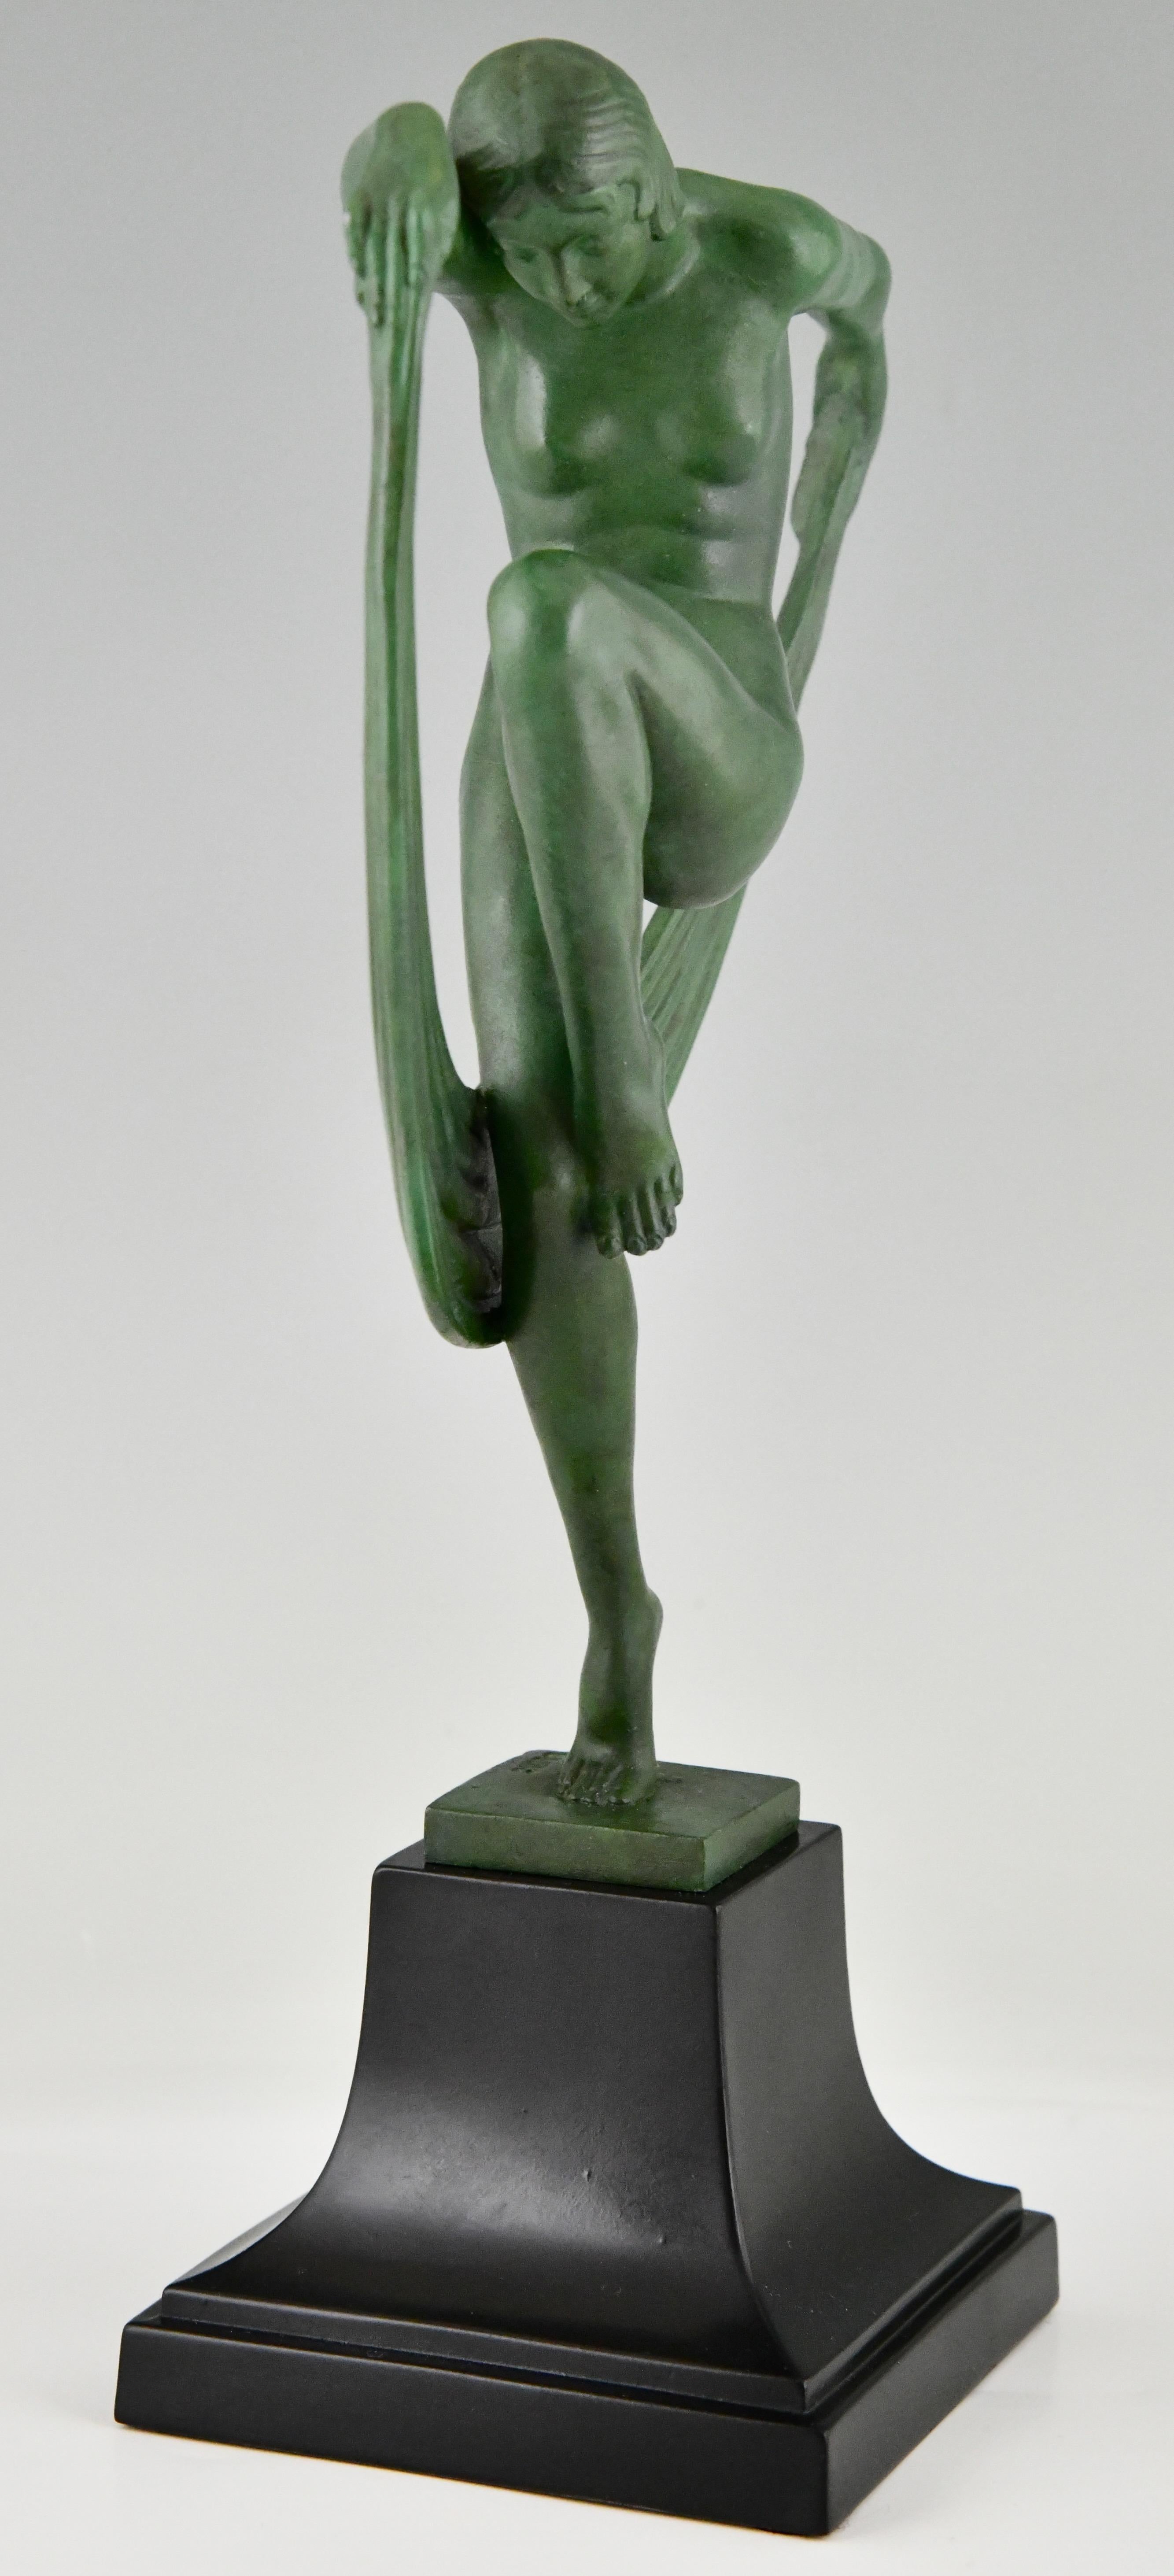 Patinated Art Deco sculpture Folie nude scarf dancer by Denis for Max le Verrier